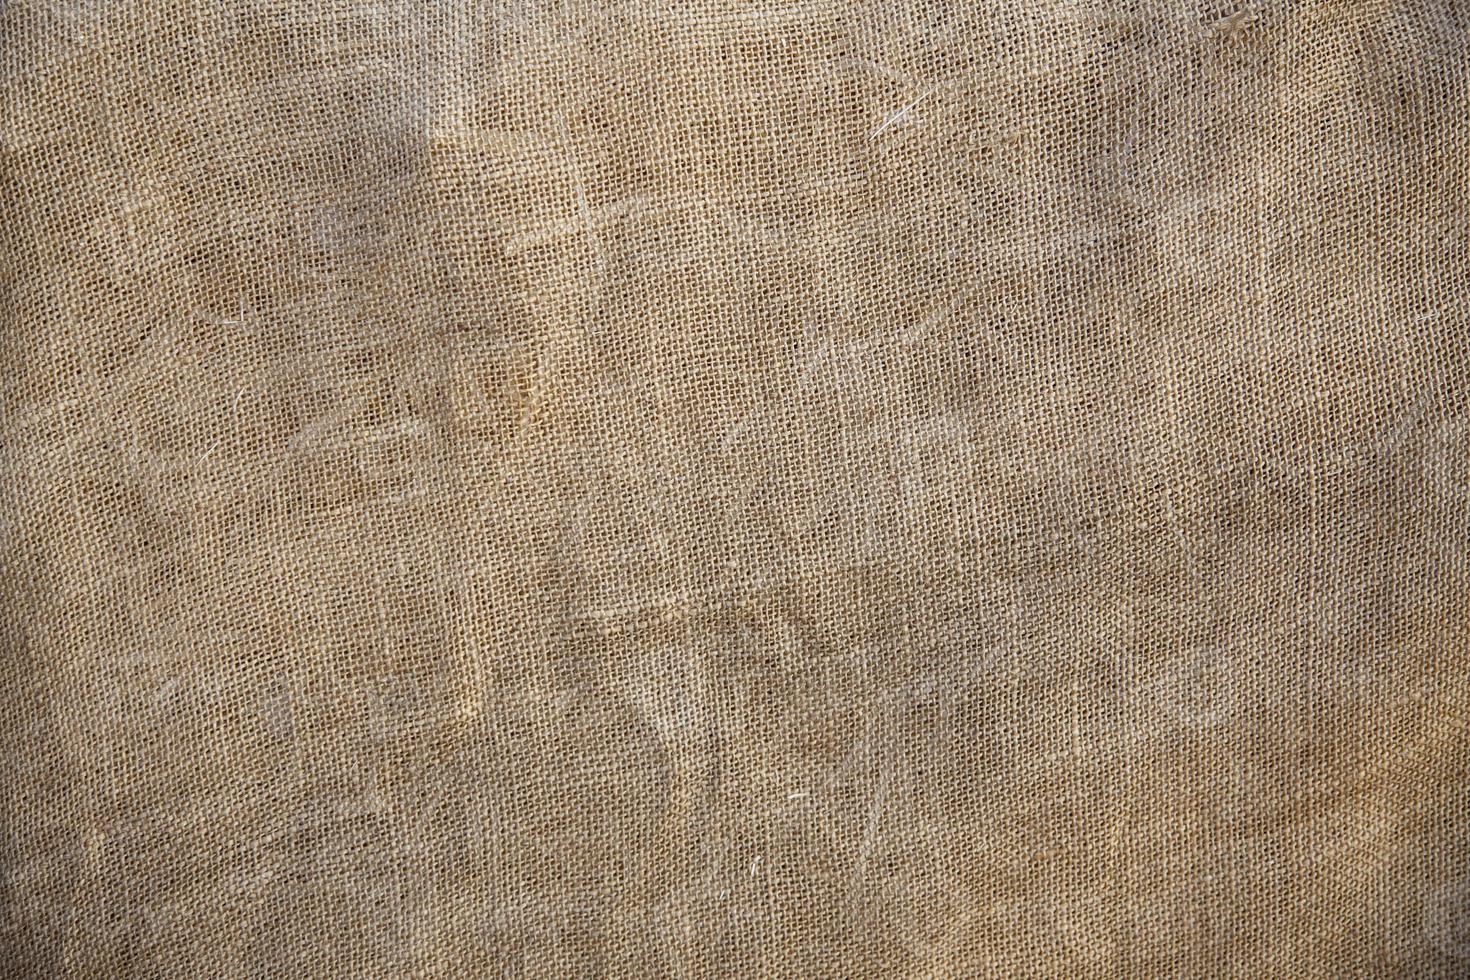 Rustic Old Fabric Burlap Texture Background photo